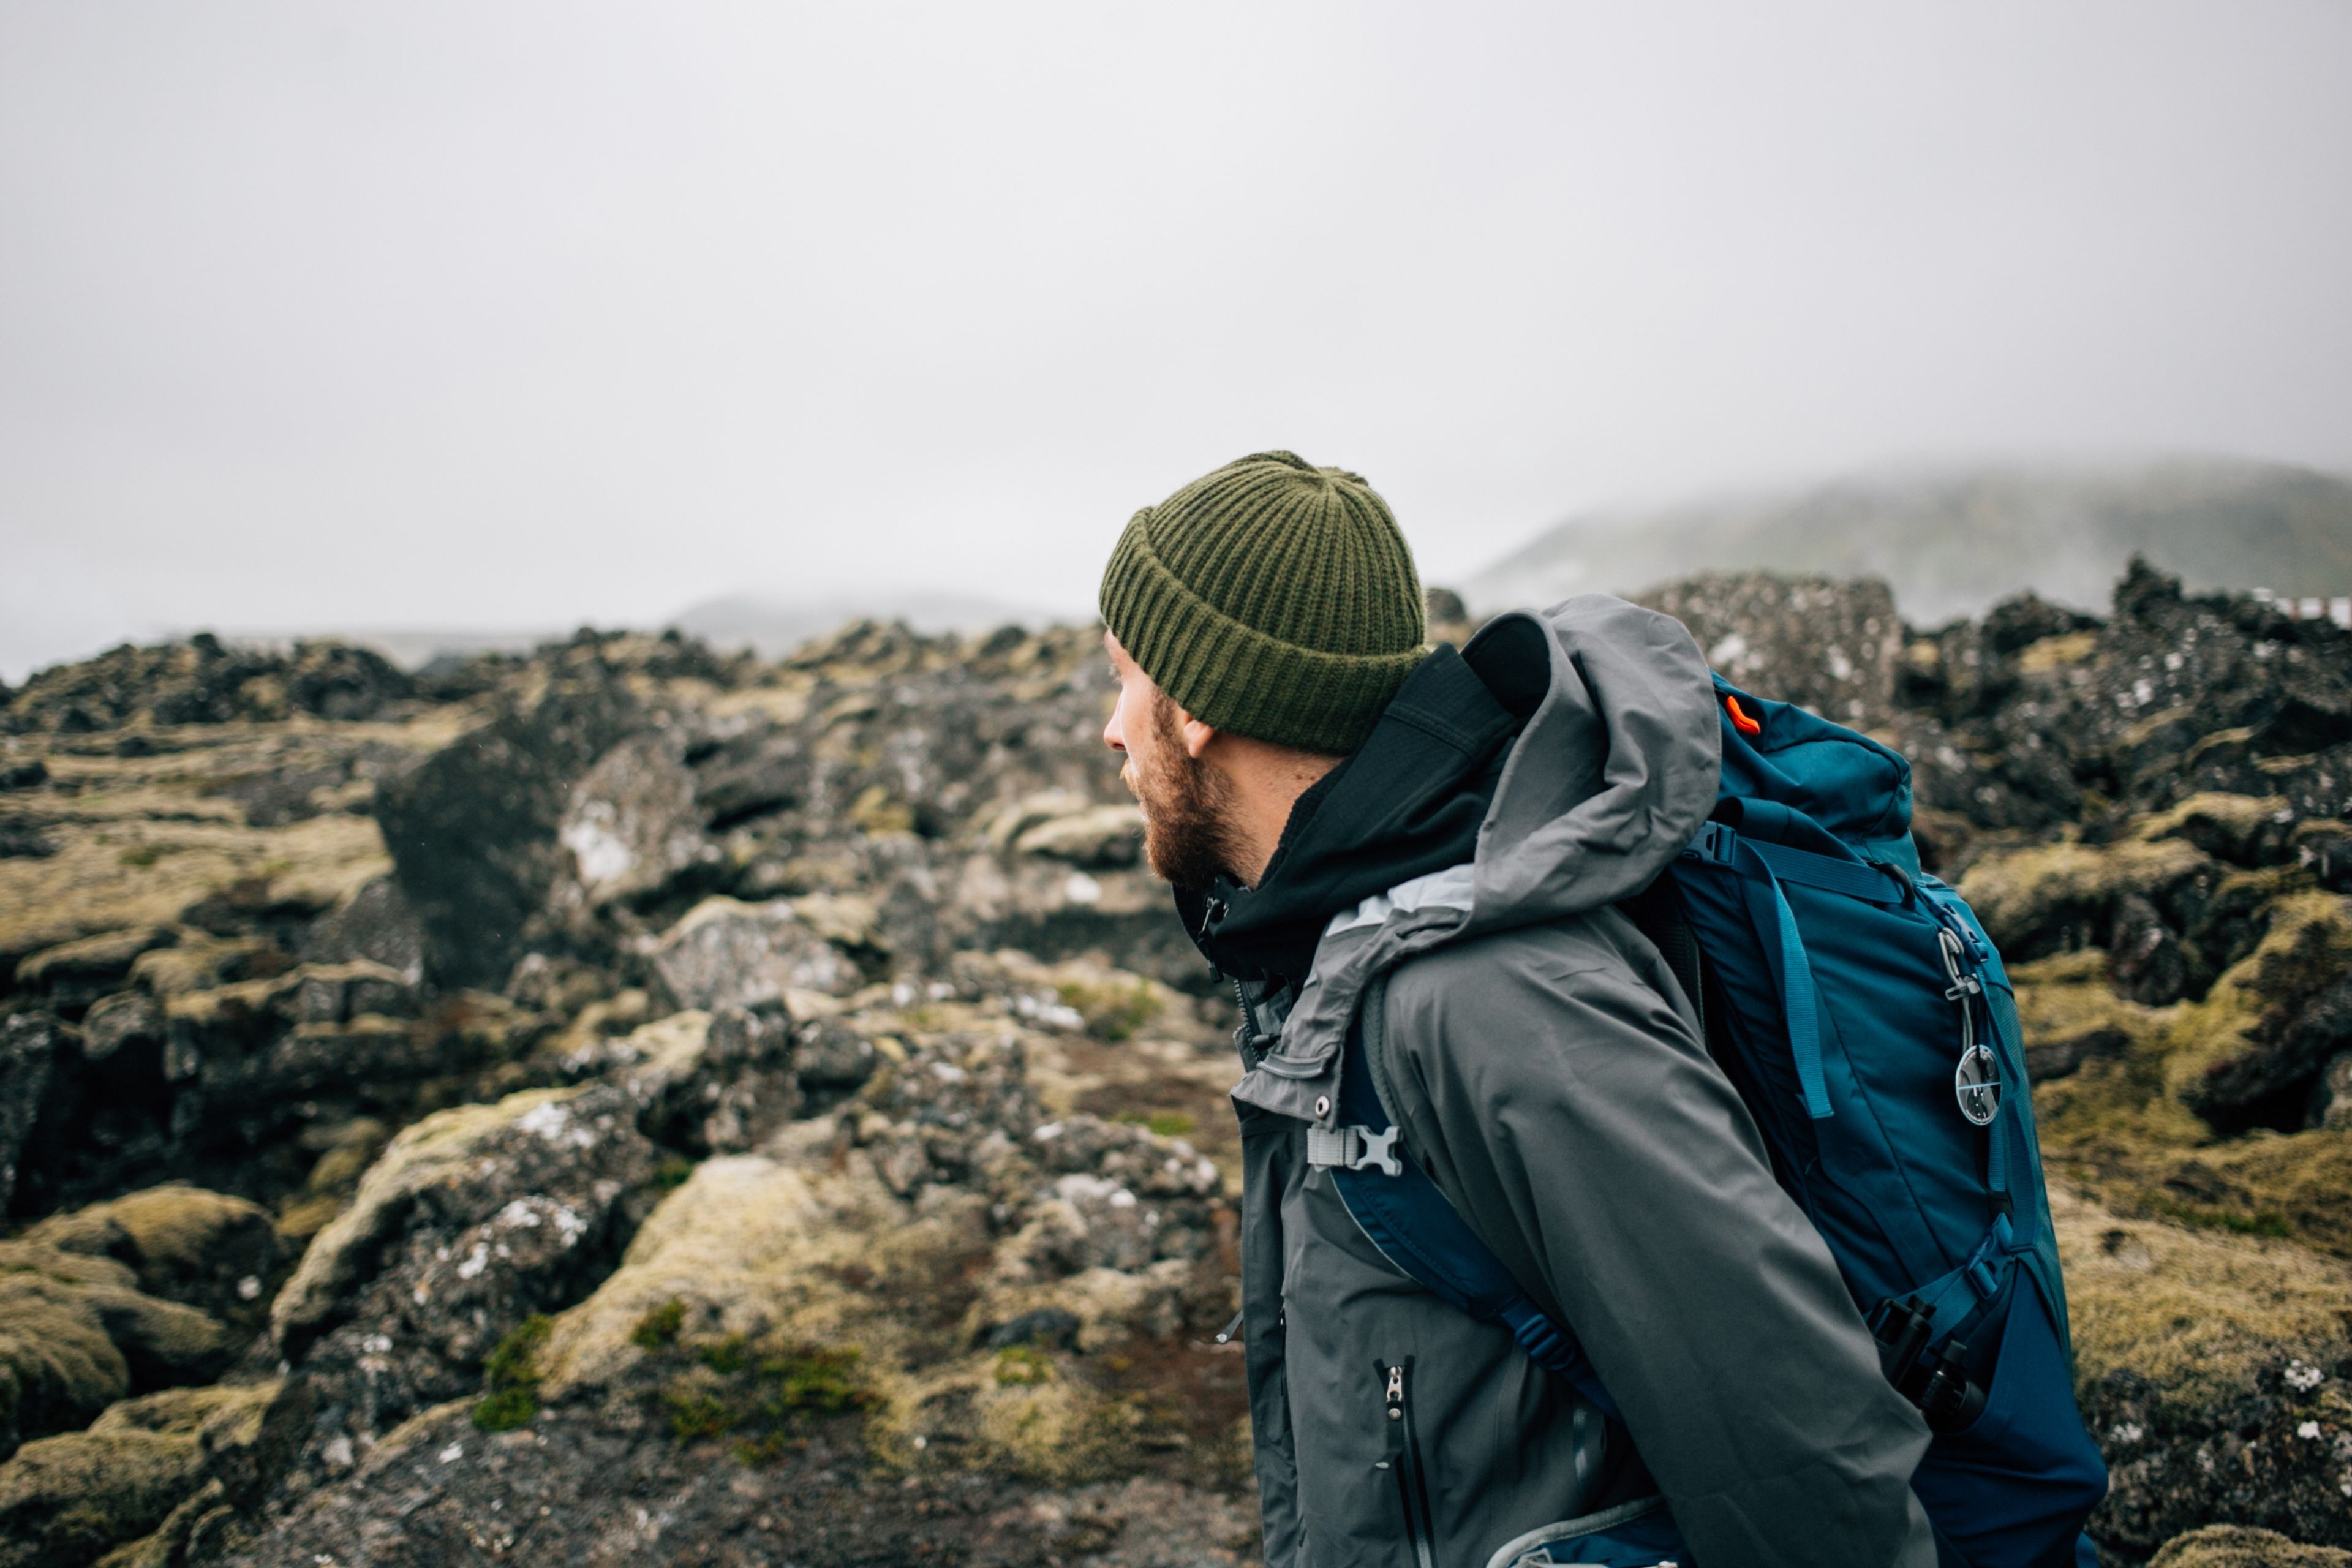 hiking trekking gear, waterproof jacket, green knit beanie and hike backpack walk through moss covered rough iceland terrain.